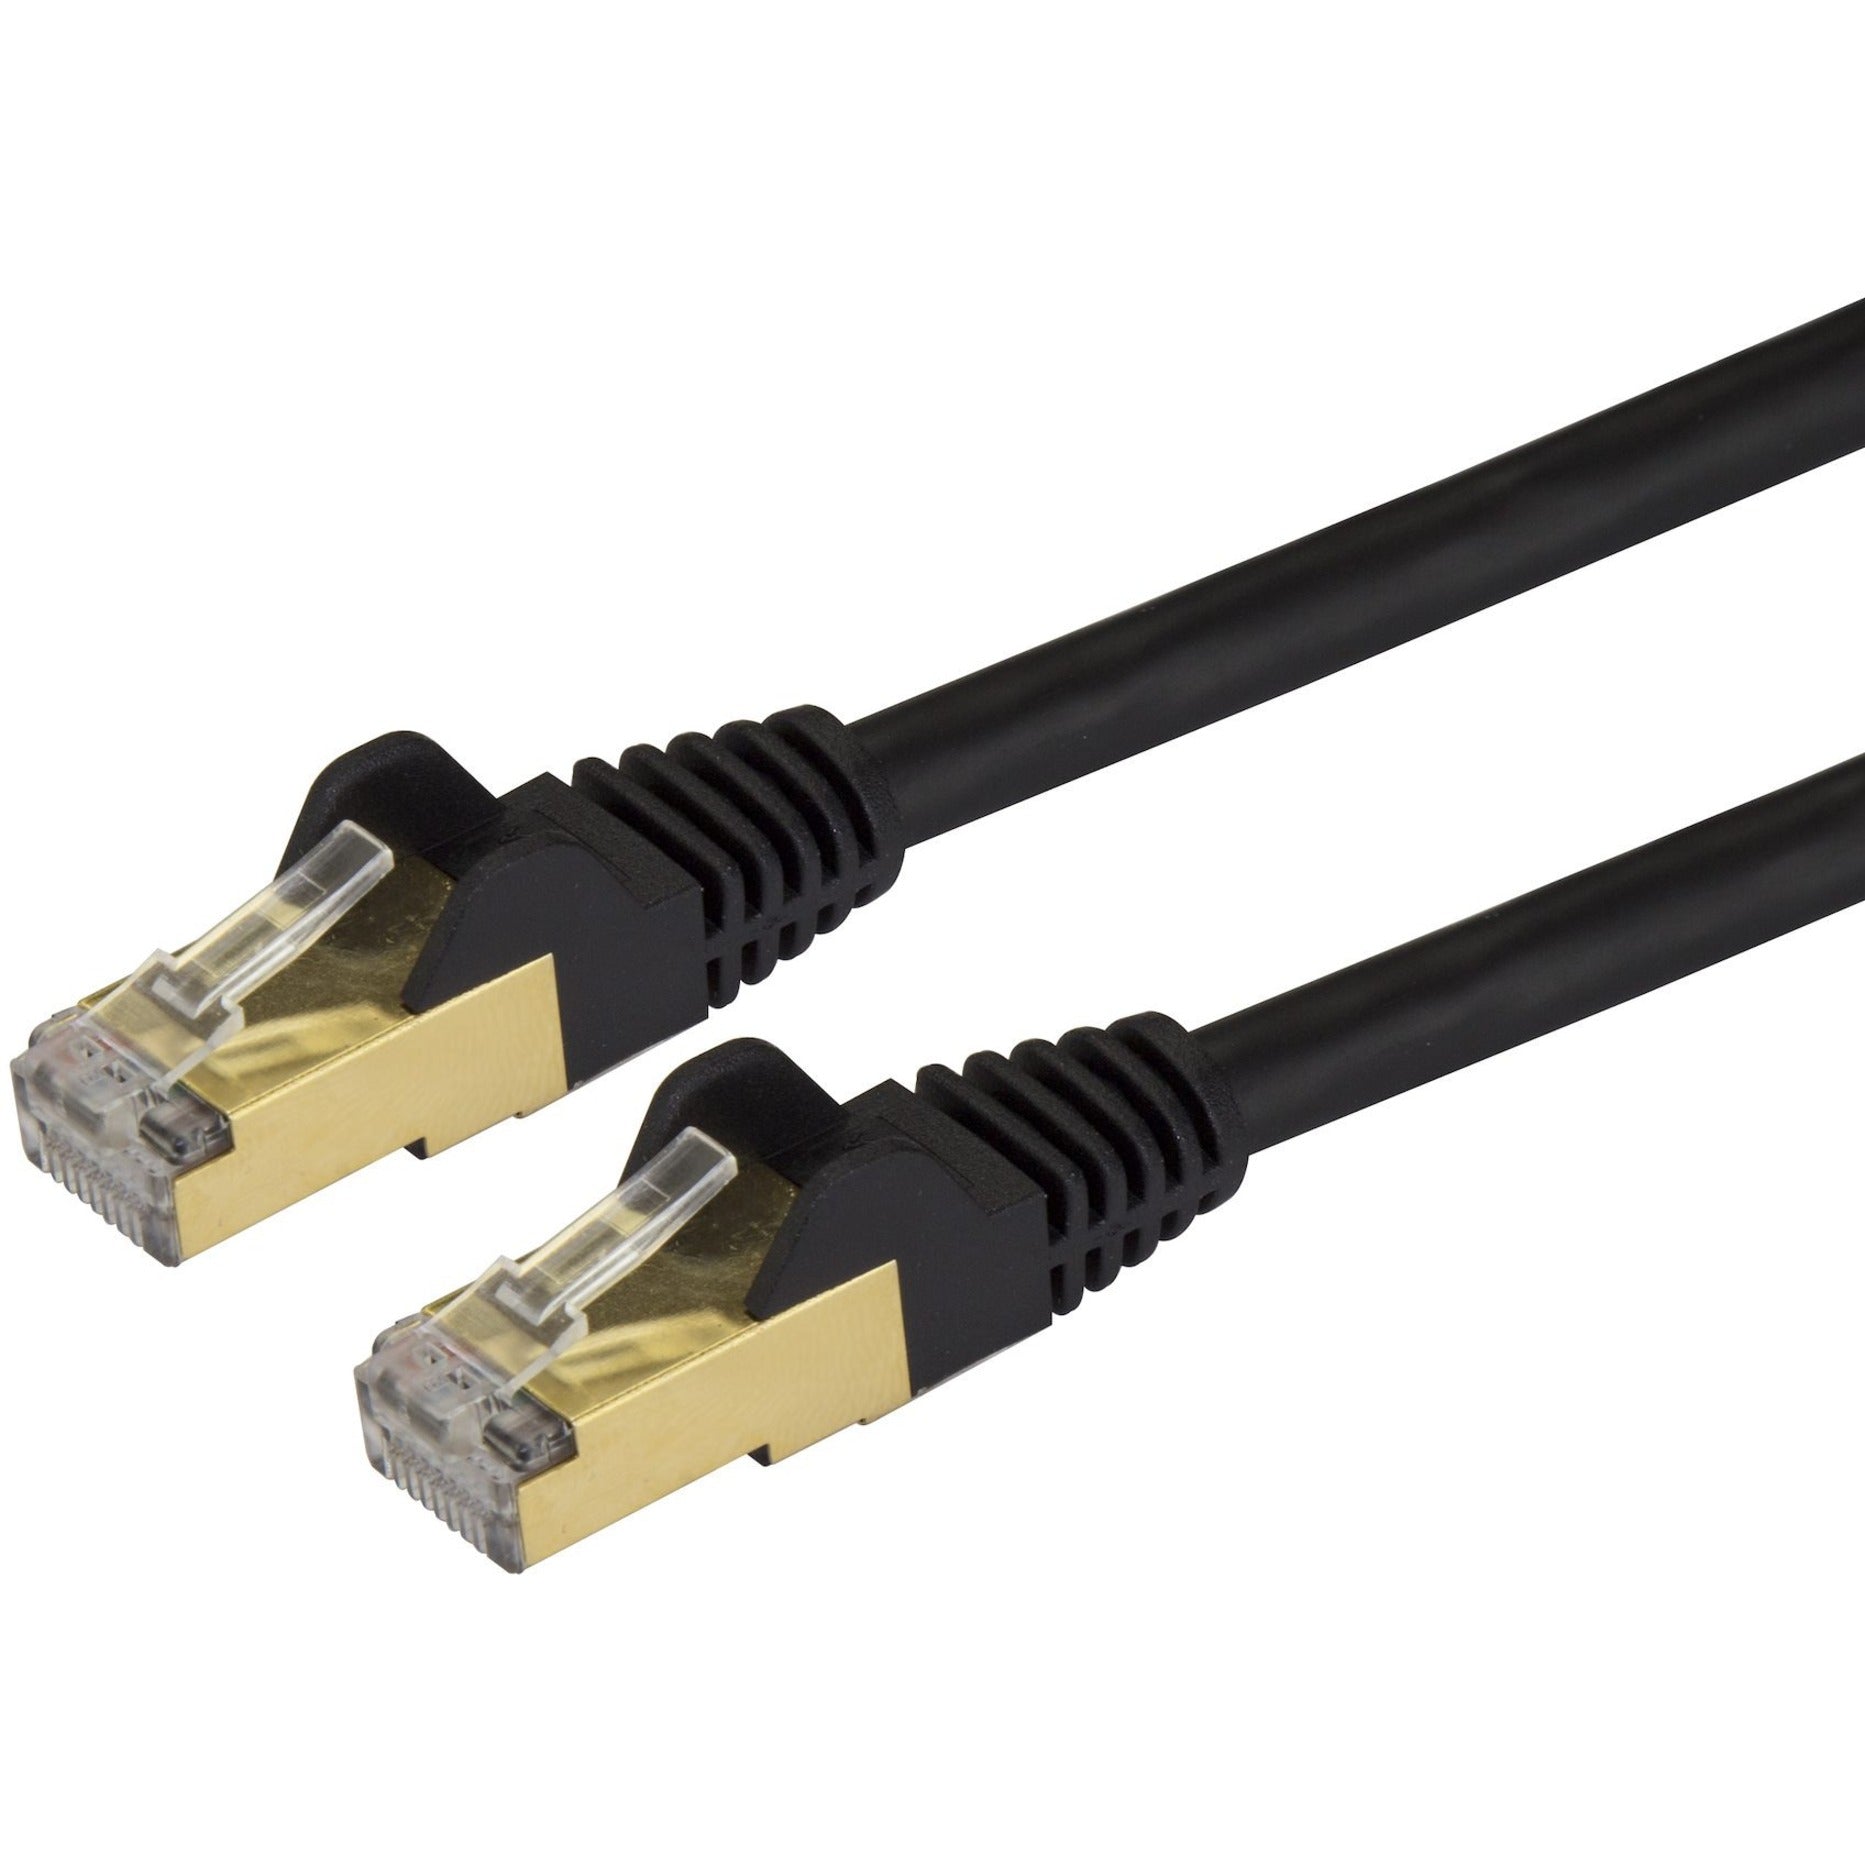 StarTech.com C6ASPAT6BK Cat6a Ethernet Patch Cable - Shielded (STP) - 6 ft., Black, Snagless RJ45 Ethernet Cord